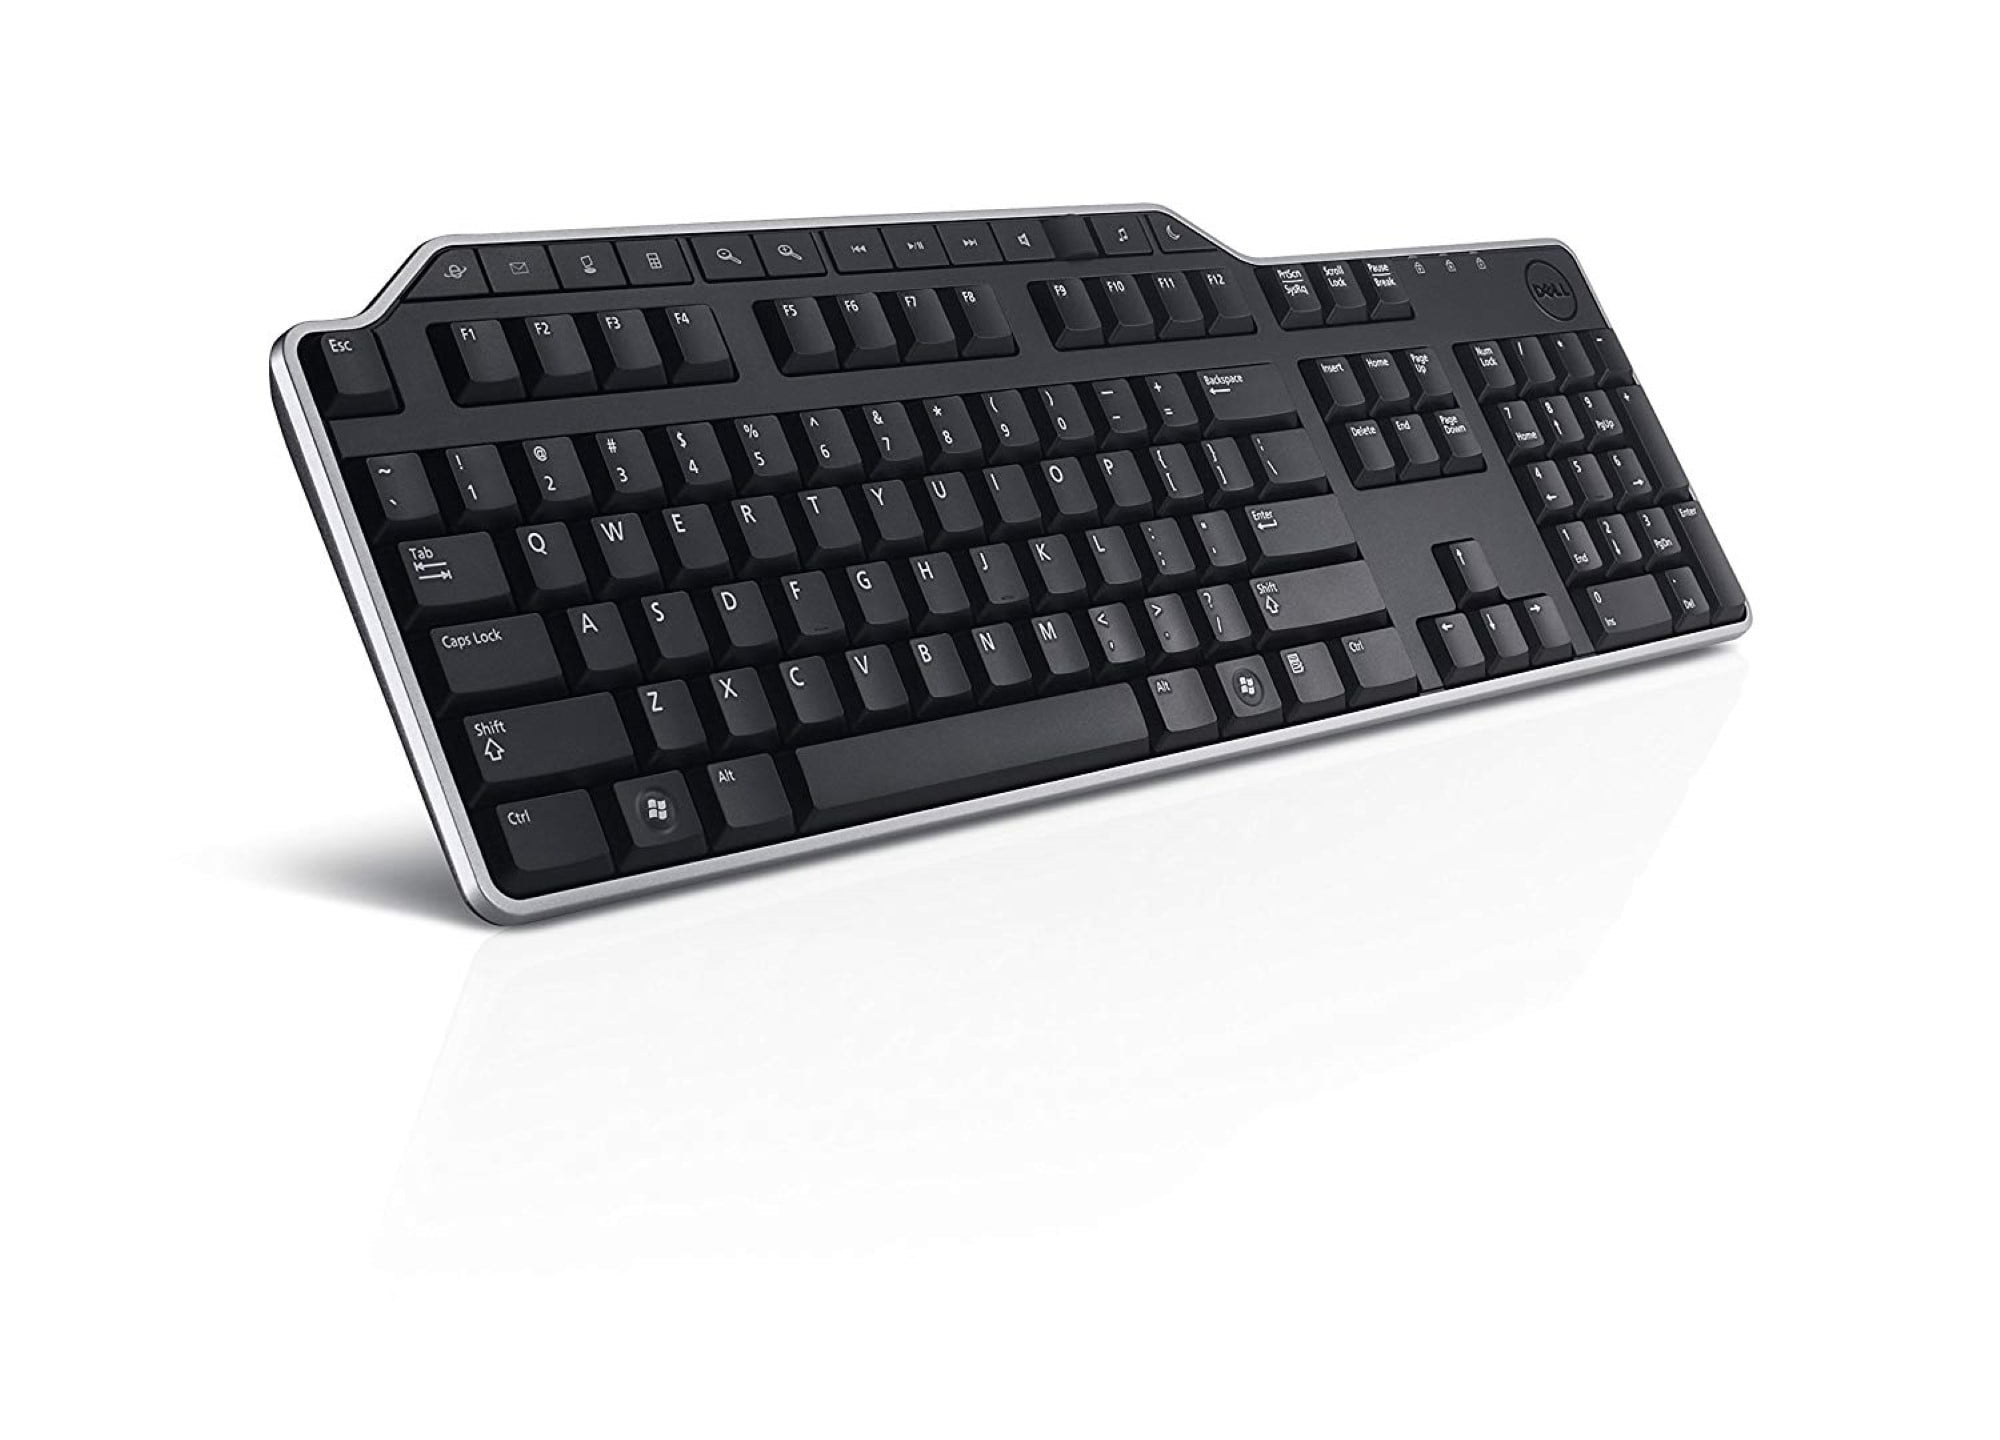 Dell KB216 - keyboard - 580-ADMT - Walmart.com